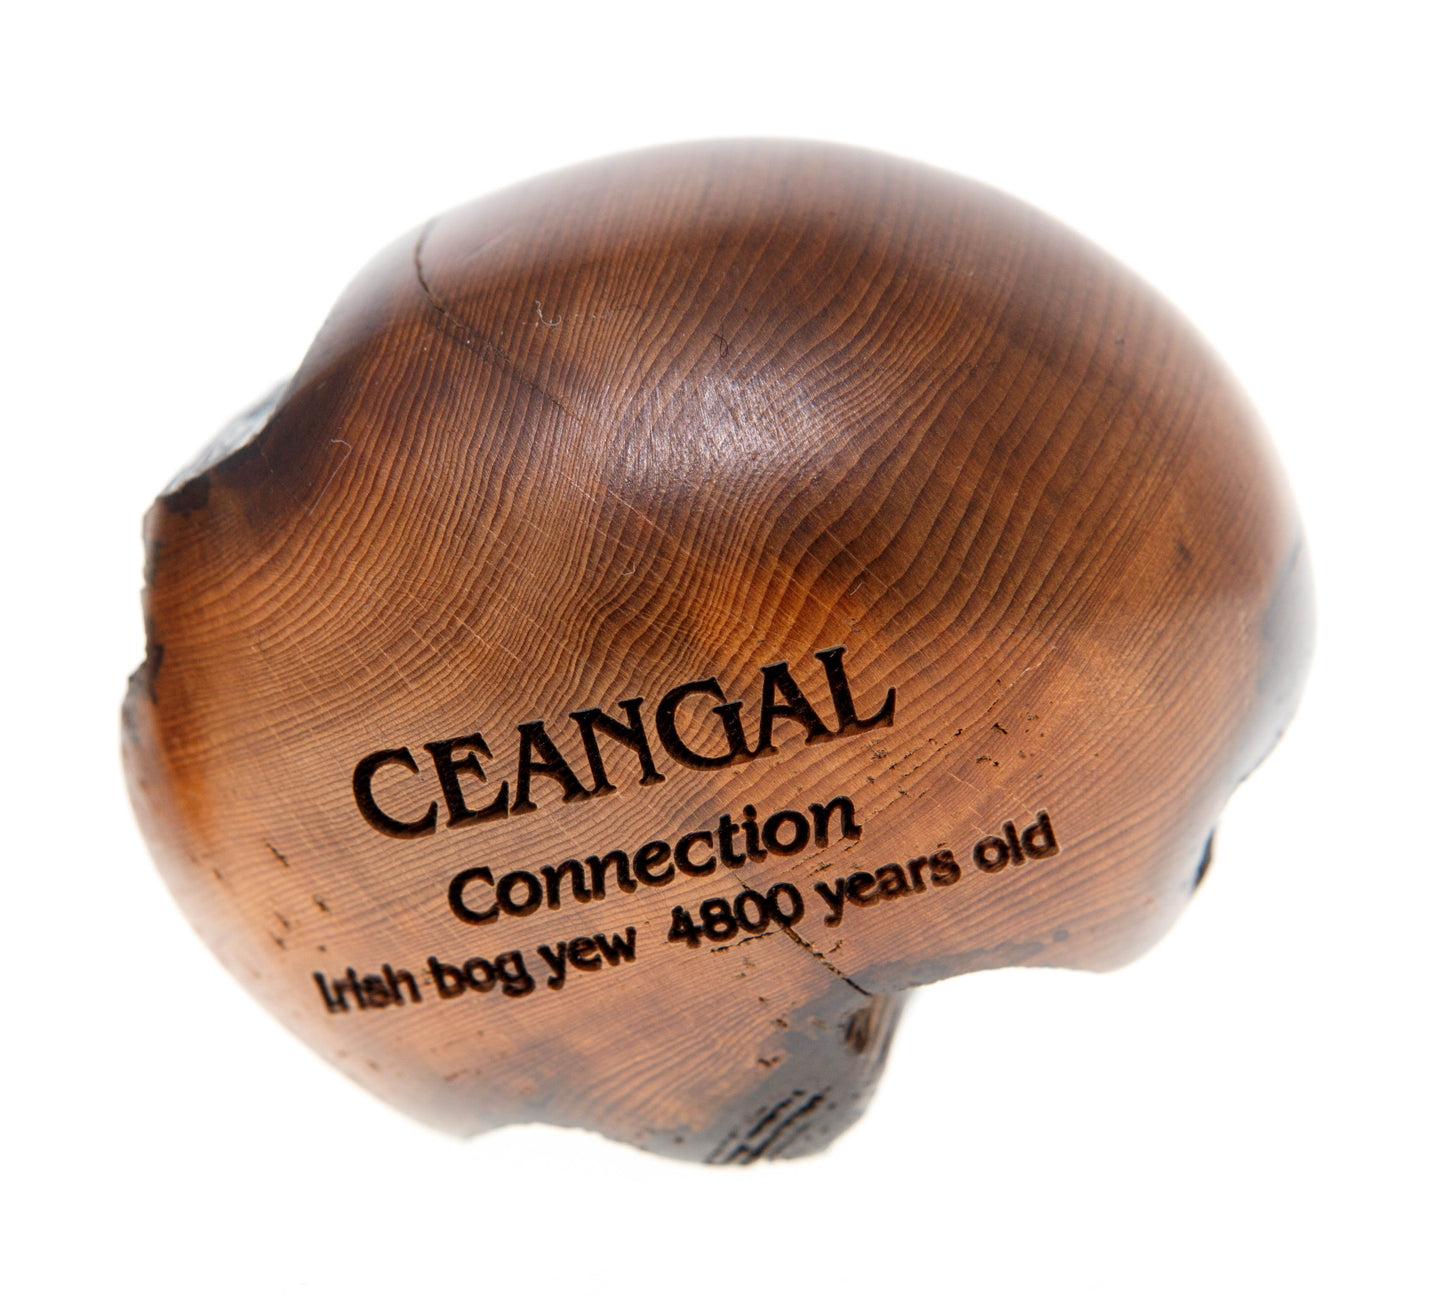 Wishstone CEANGAL Connection Irish bog yew 4800 years old